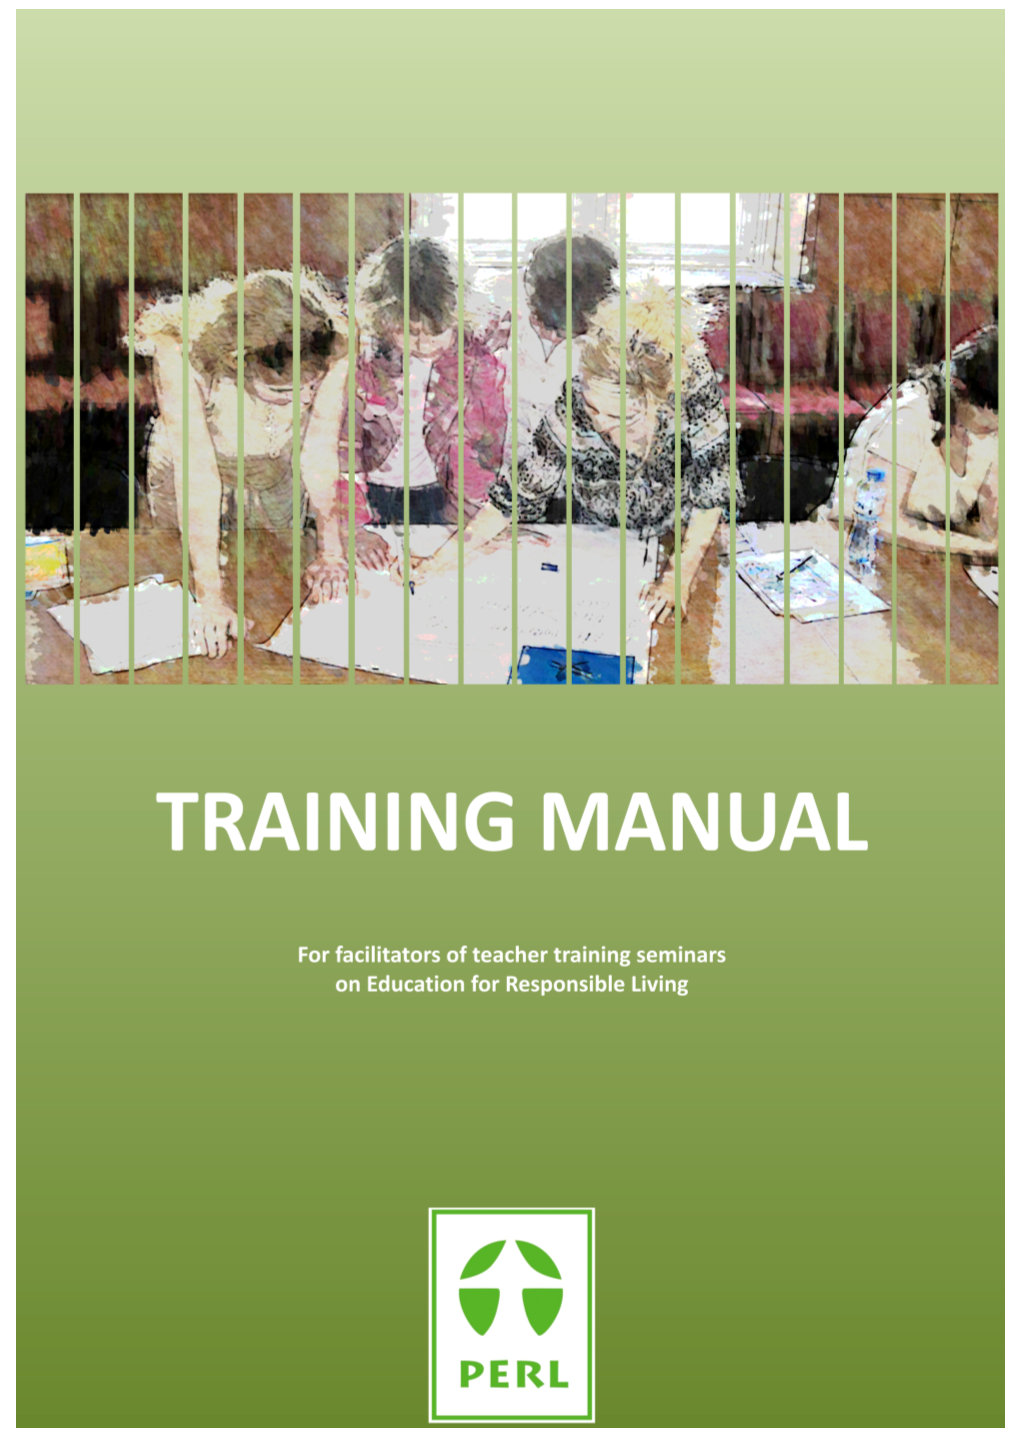 Training Manual for Facilitators of Teacher Training Seminars on Education for Responsible Living